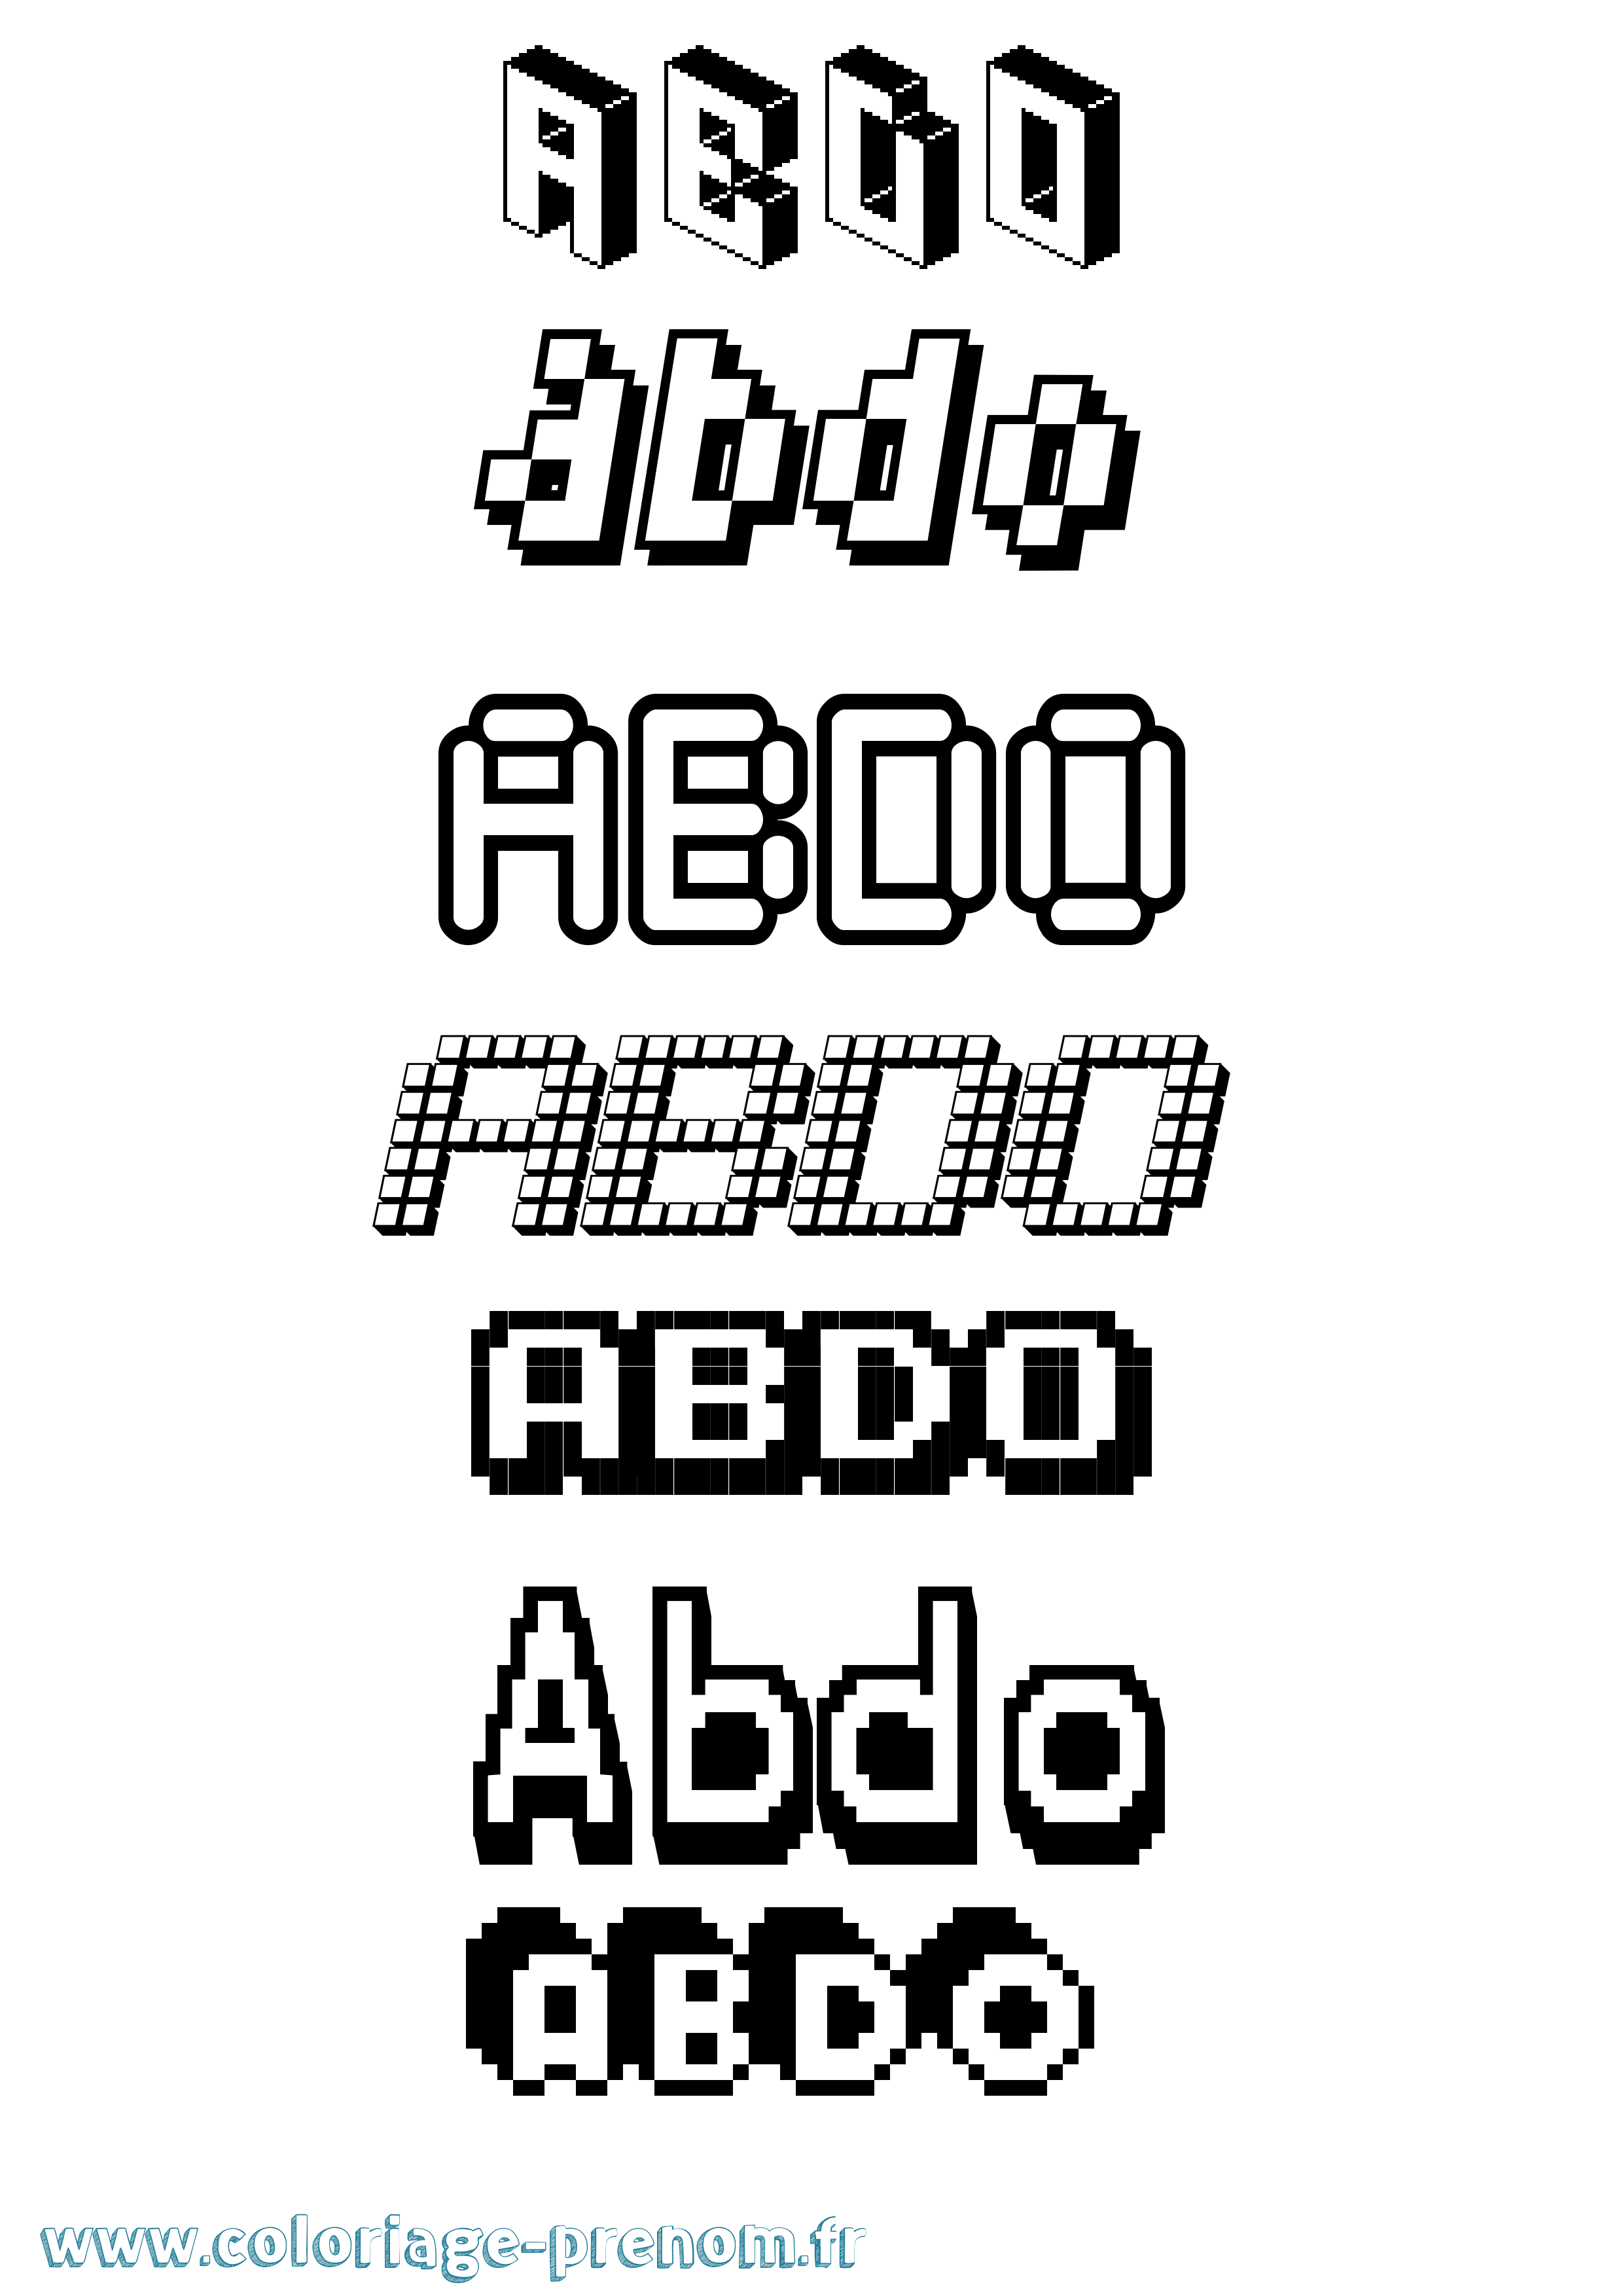 Coloriage prénom Abdo Pixel